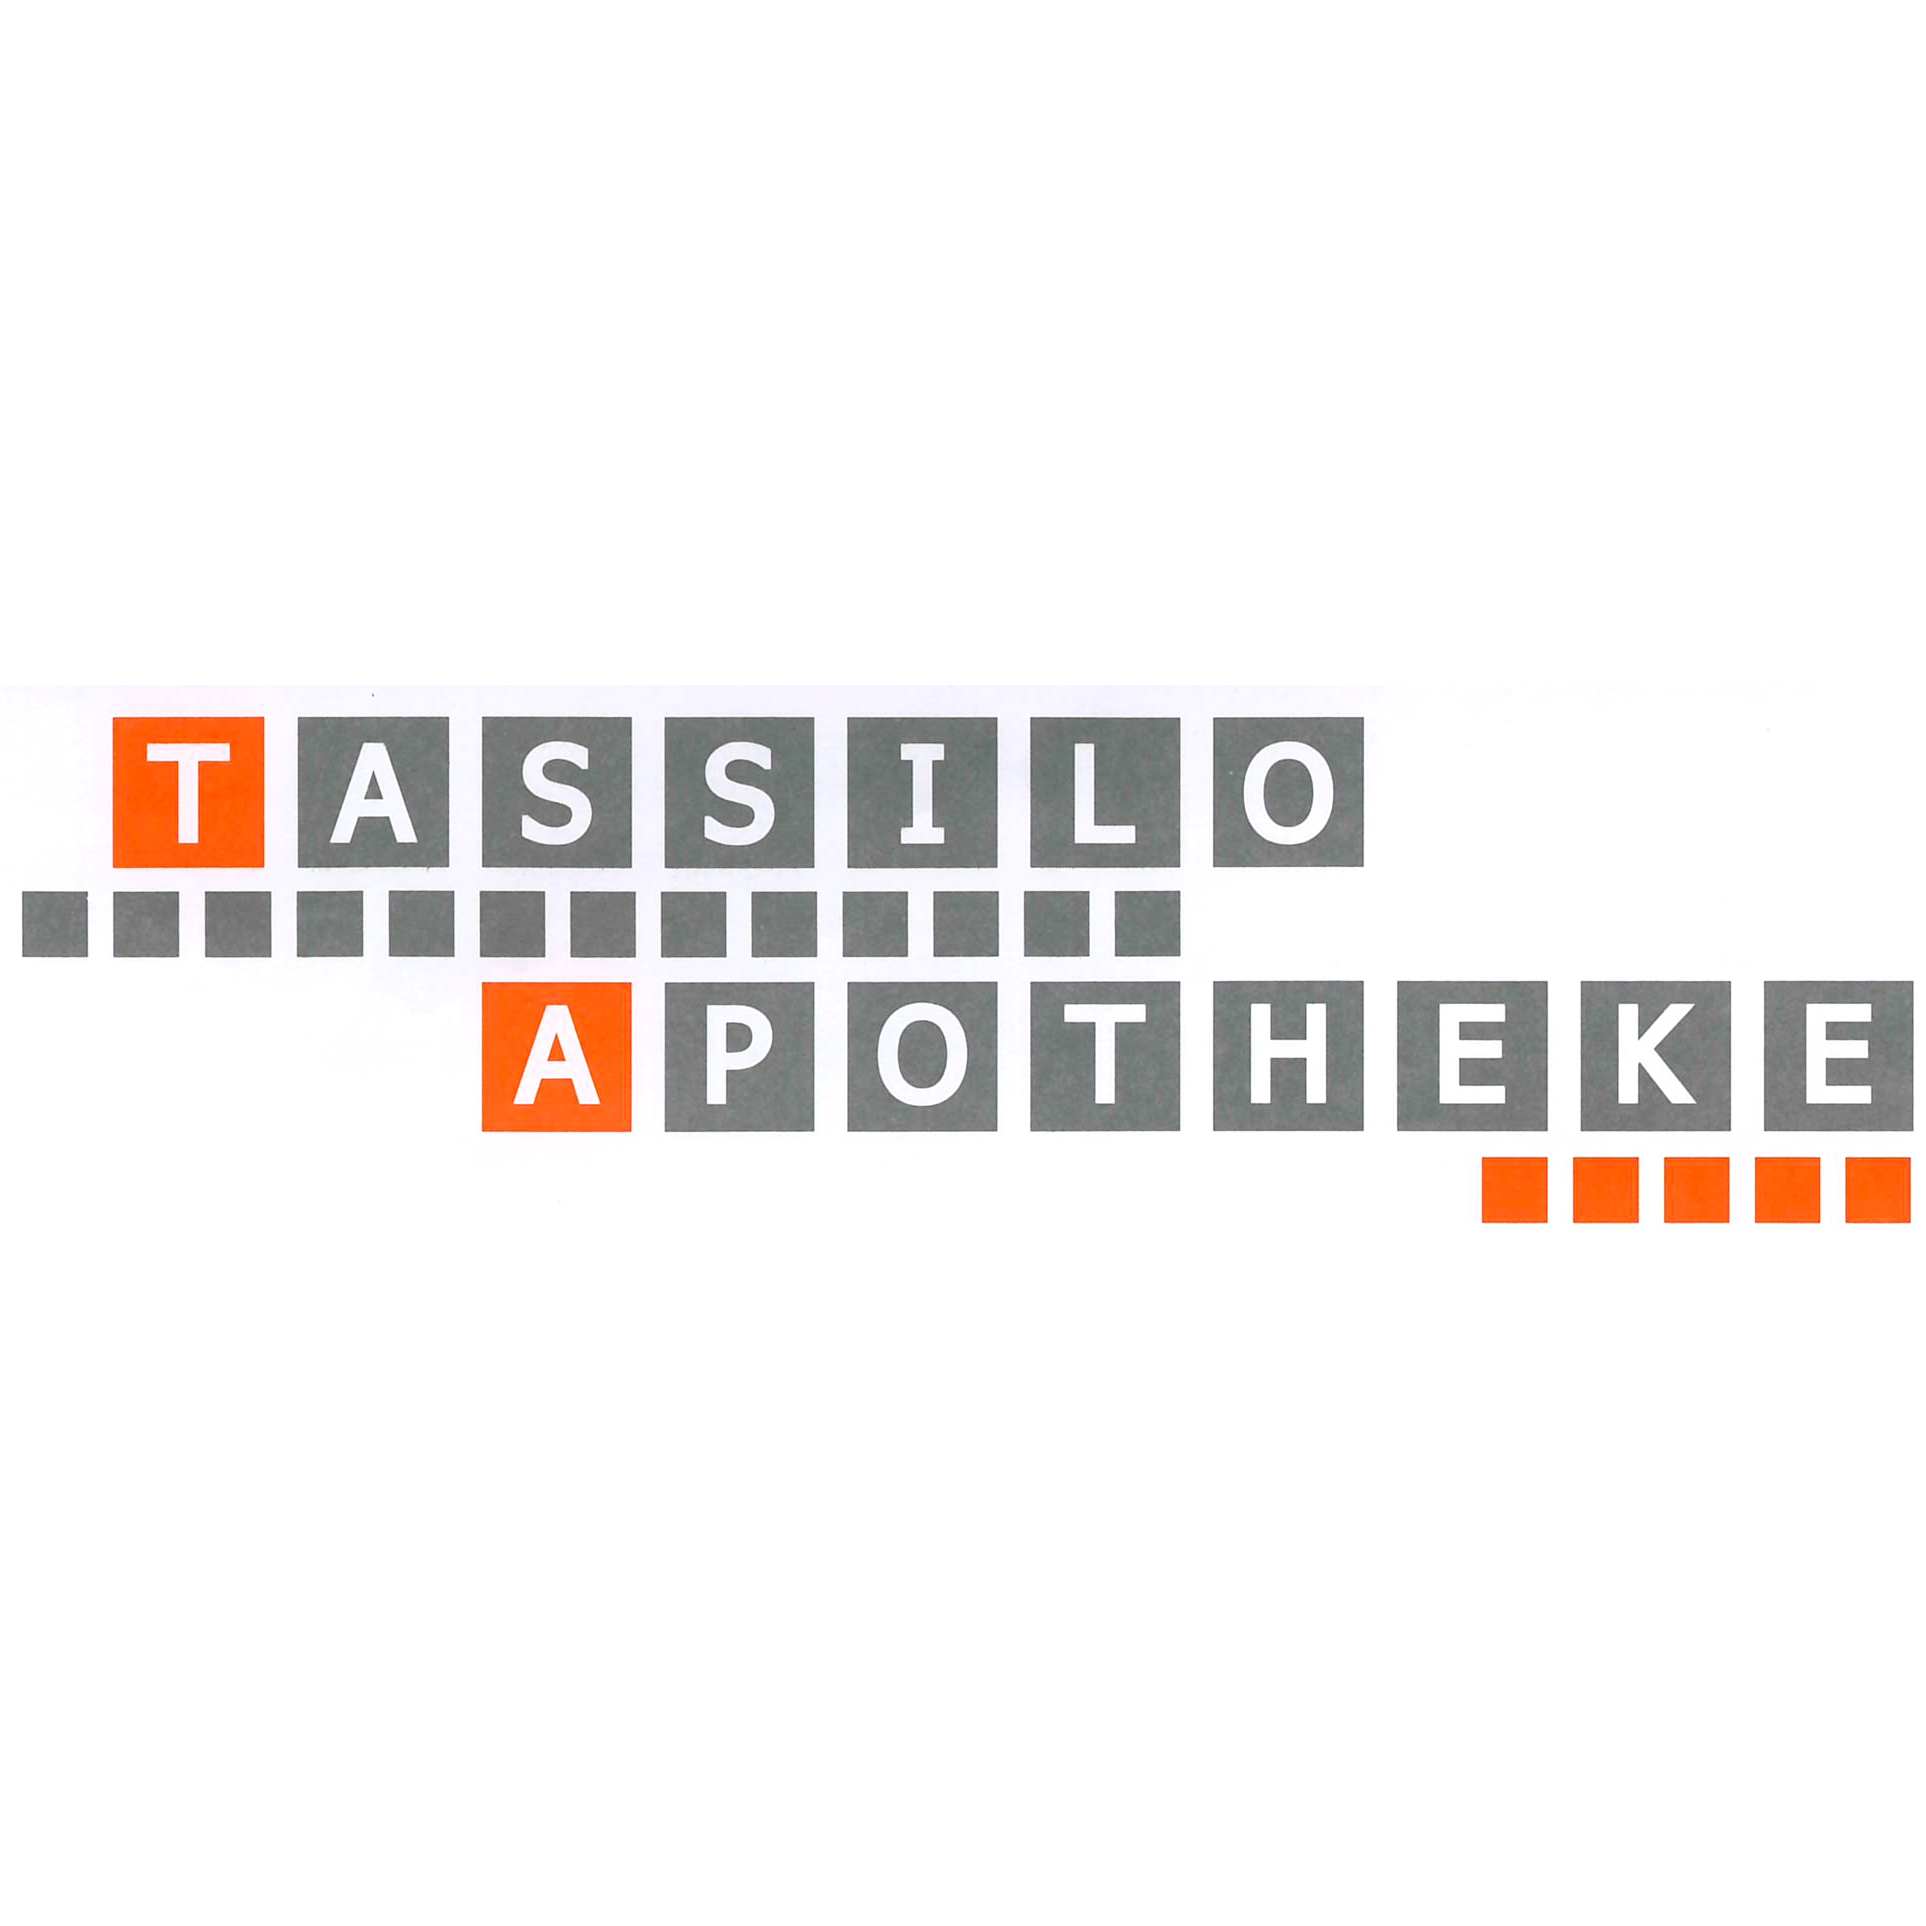 Tassilo-Apotheke in München - Logo